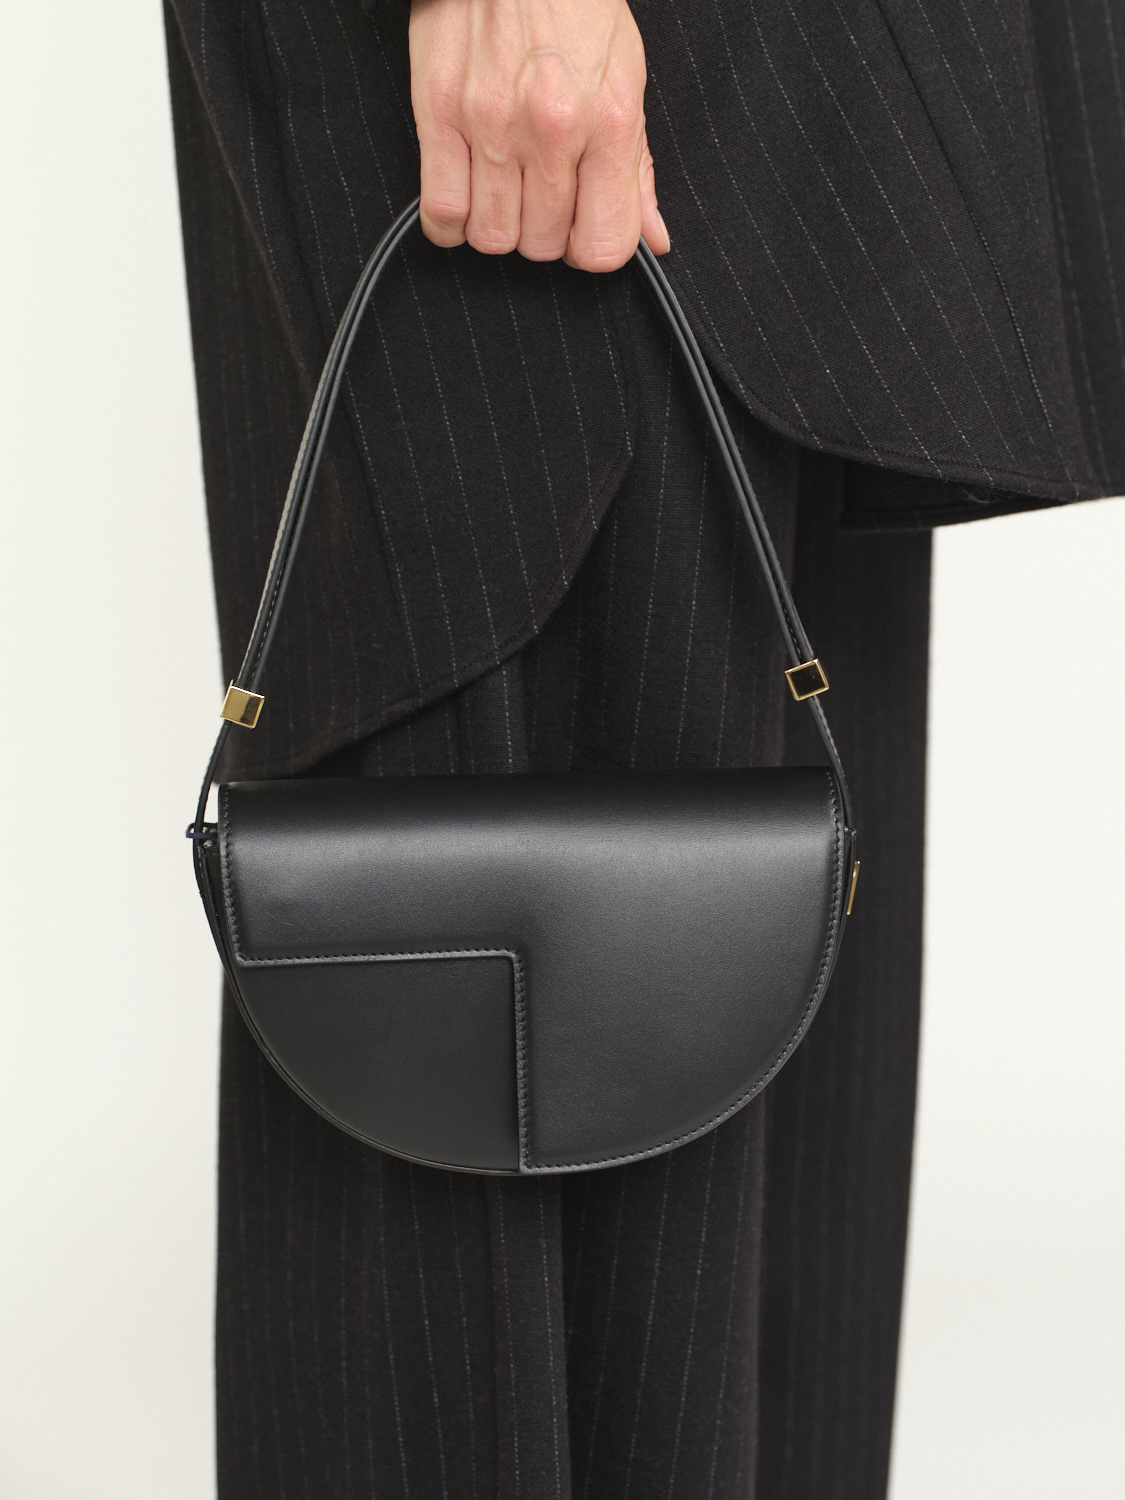 Patou Le petit Patou bag – schwarze Tasche aus Kalbsleder   schwarz One Size